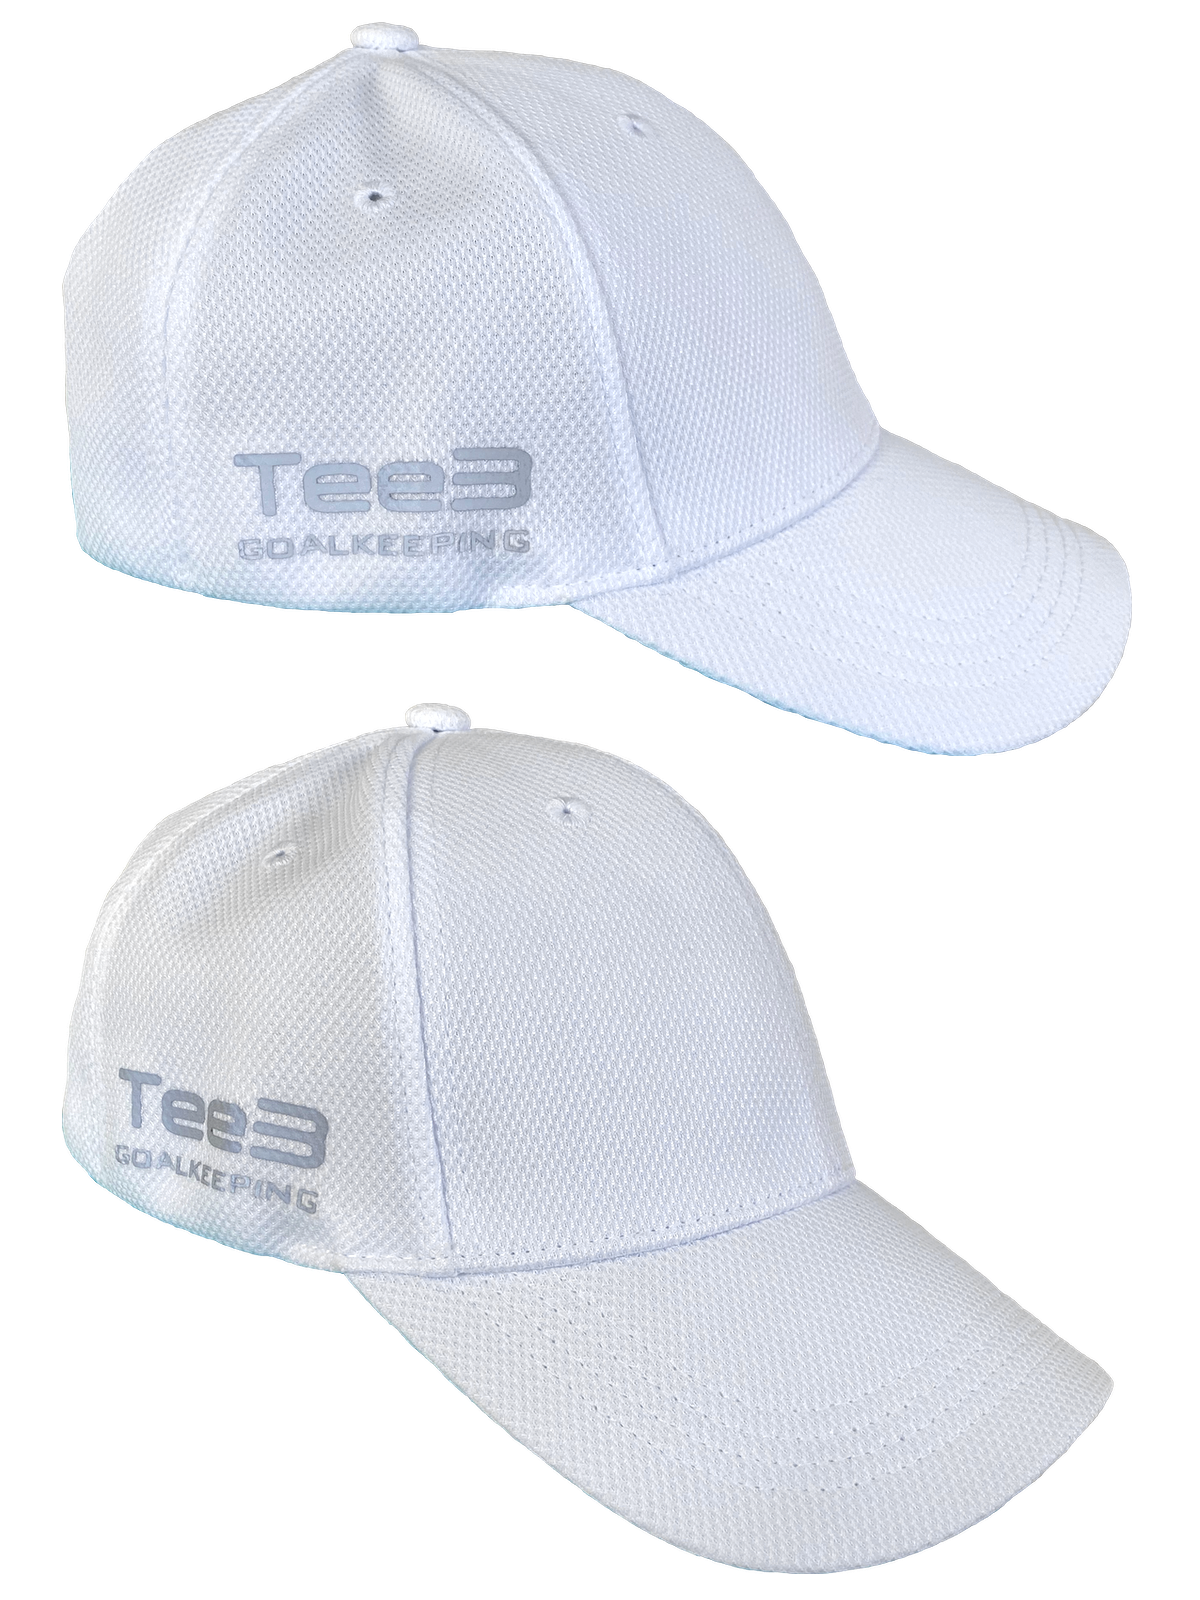 Tee3 Sports Hat - Cap White / Reflective